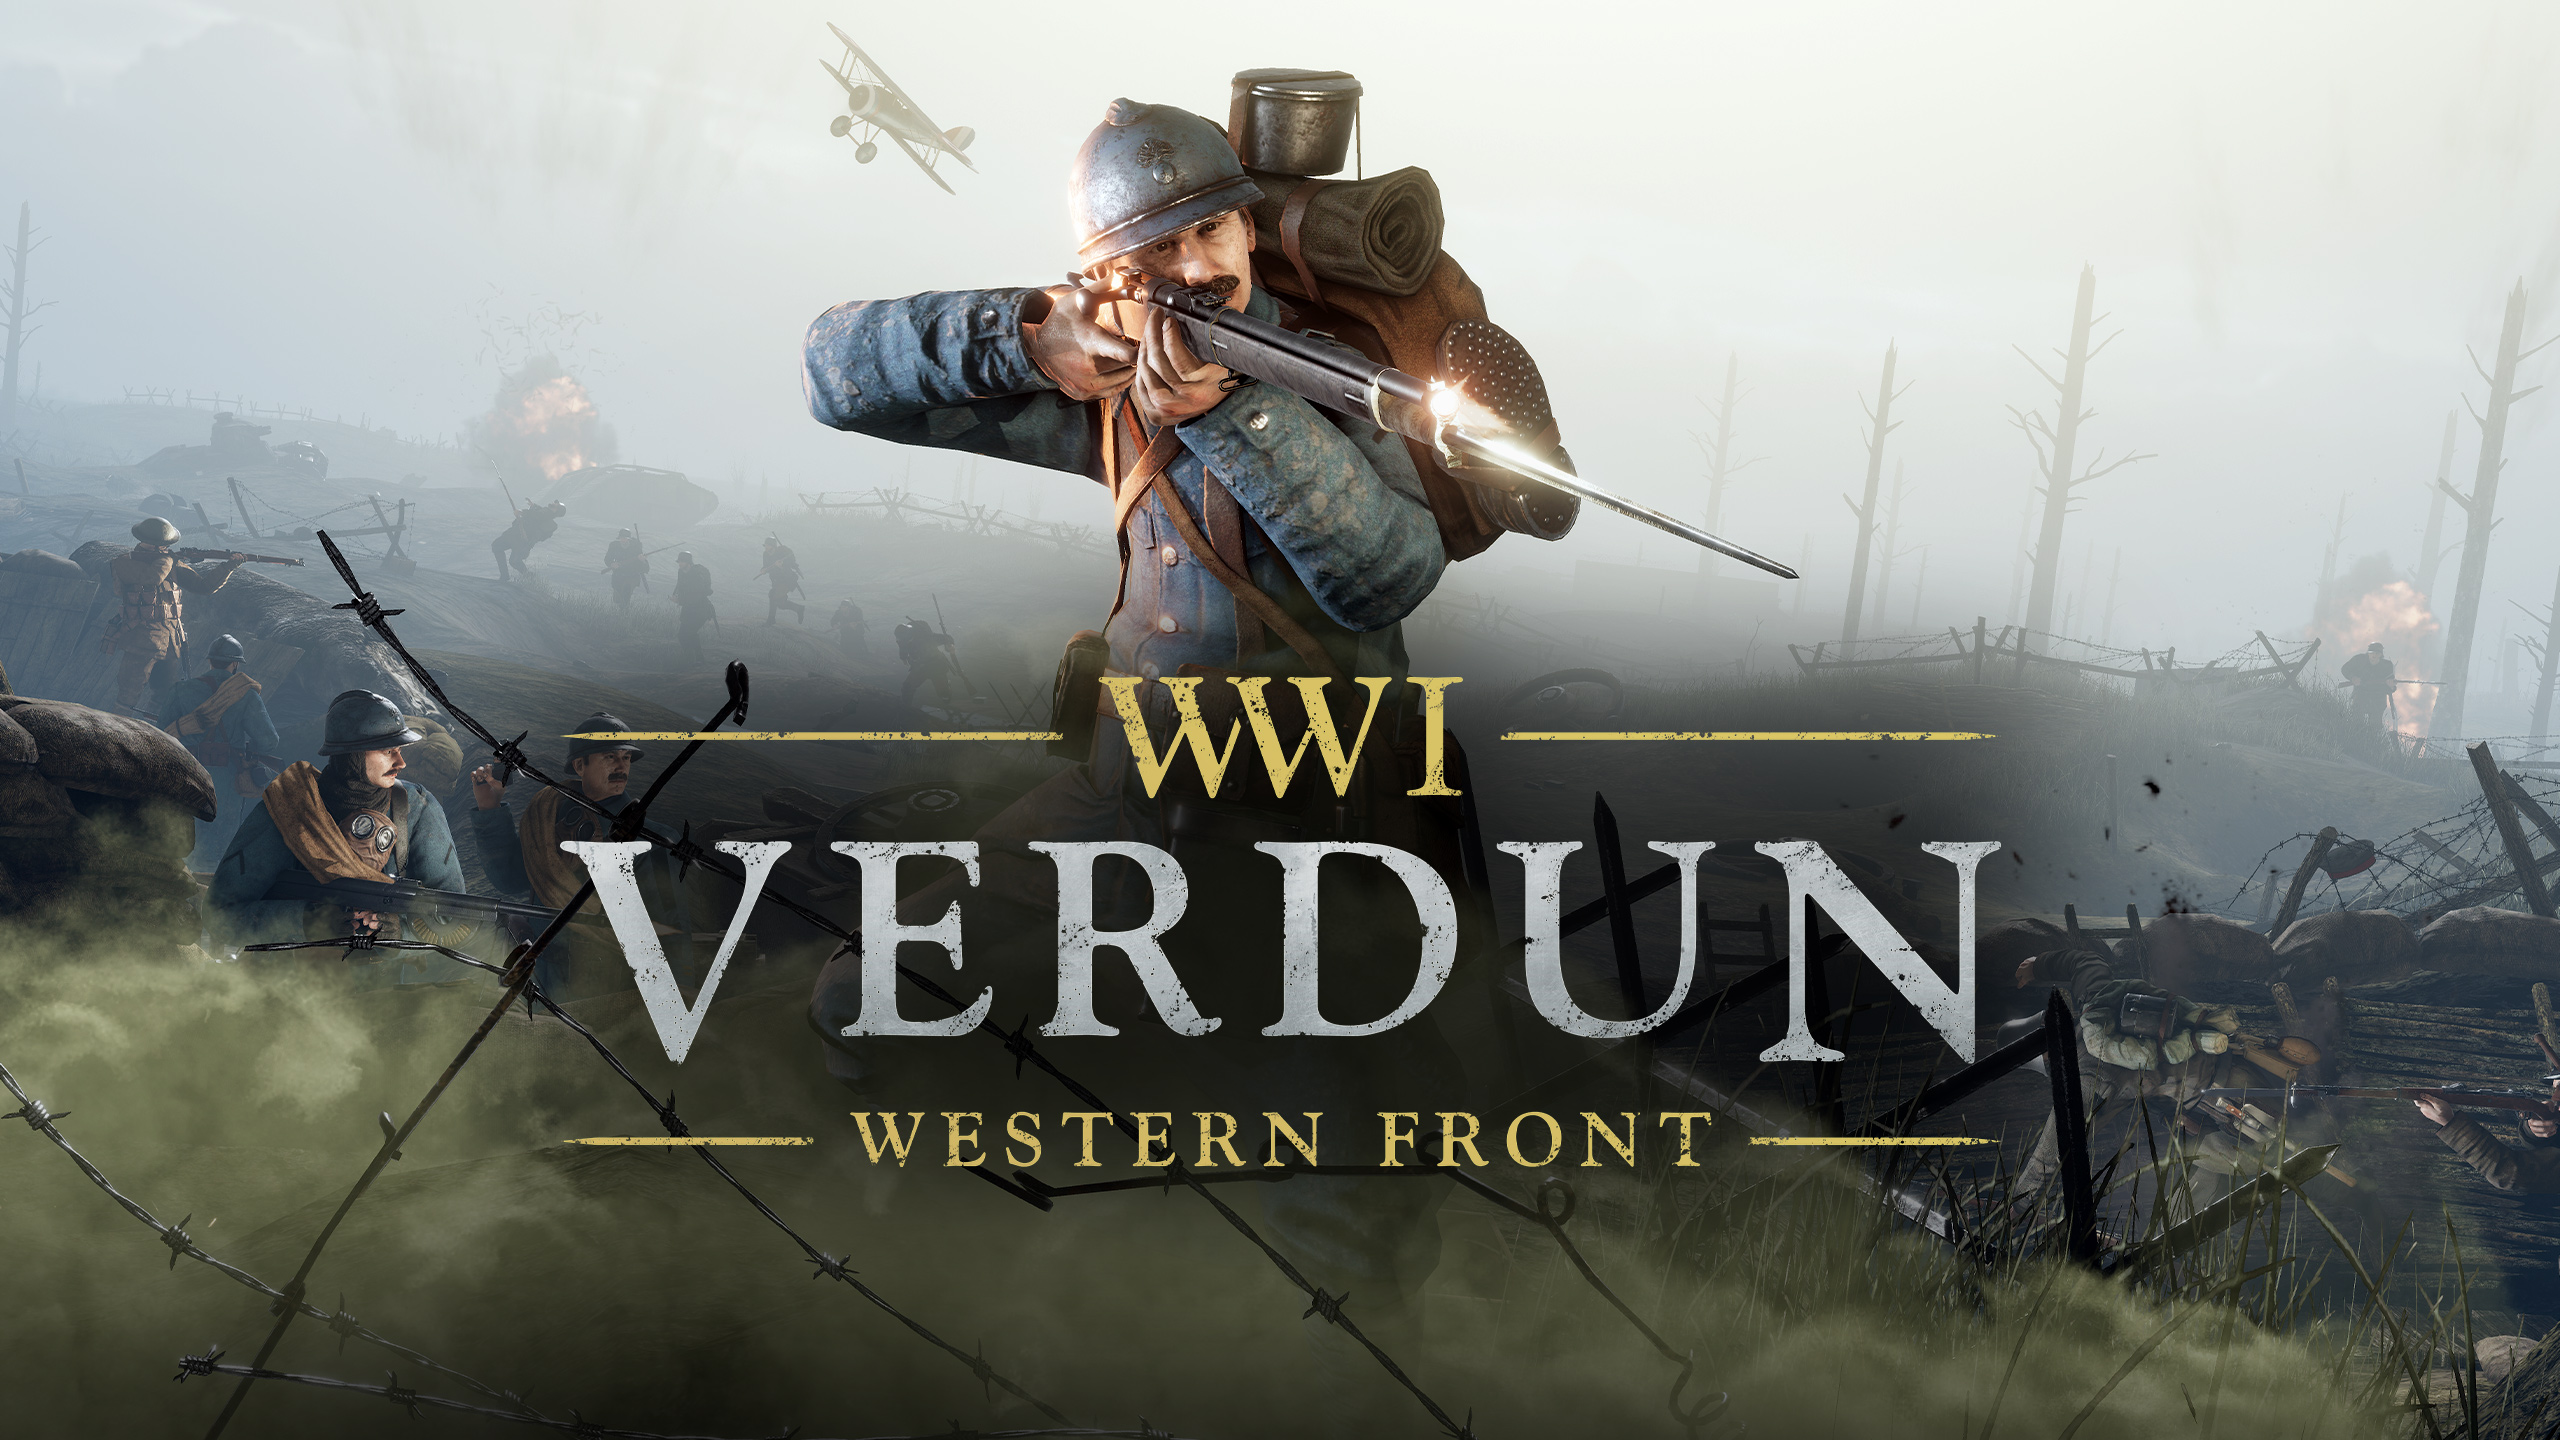 Verdun gratis en Epic 22 de julio